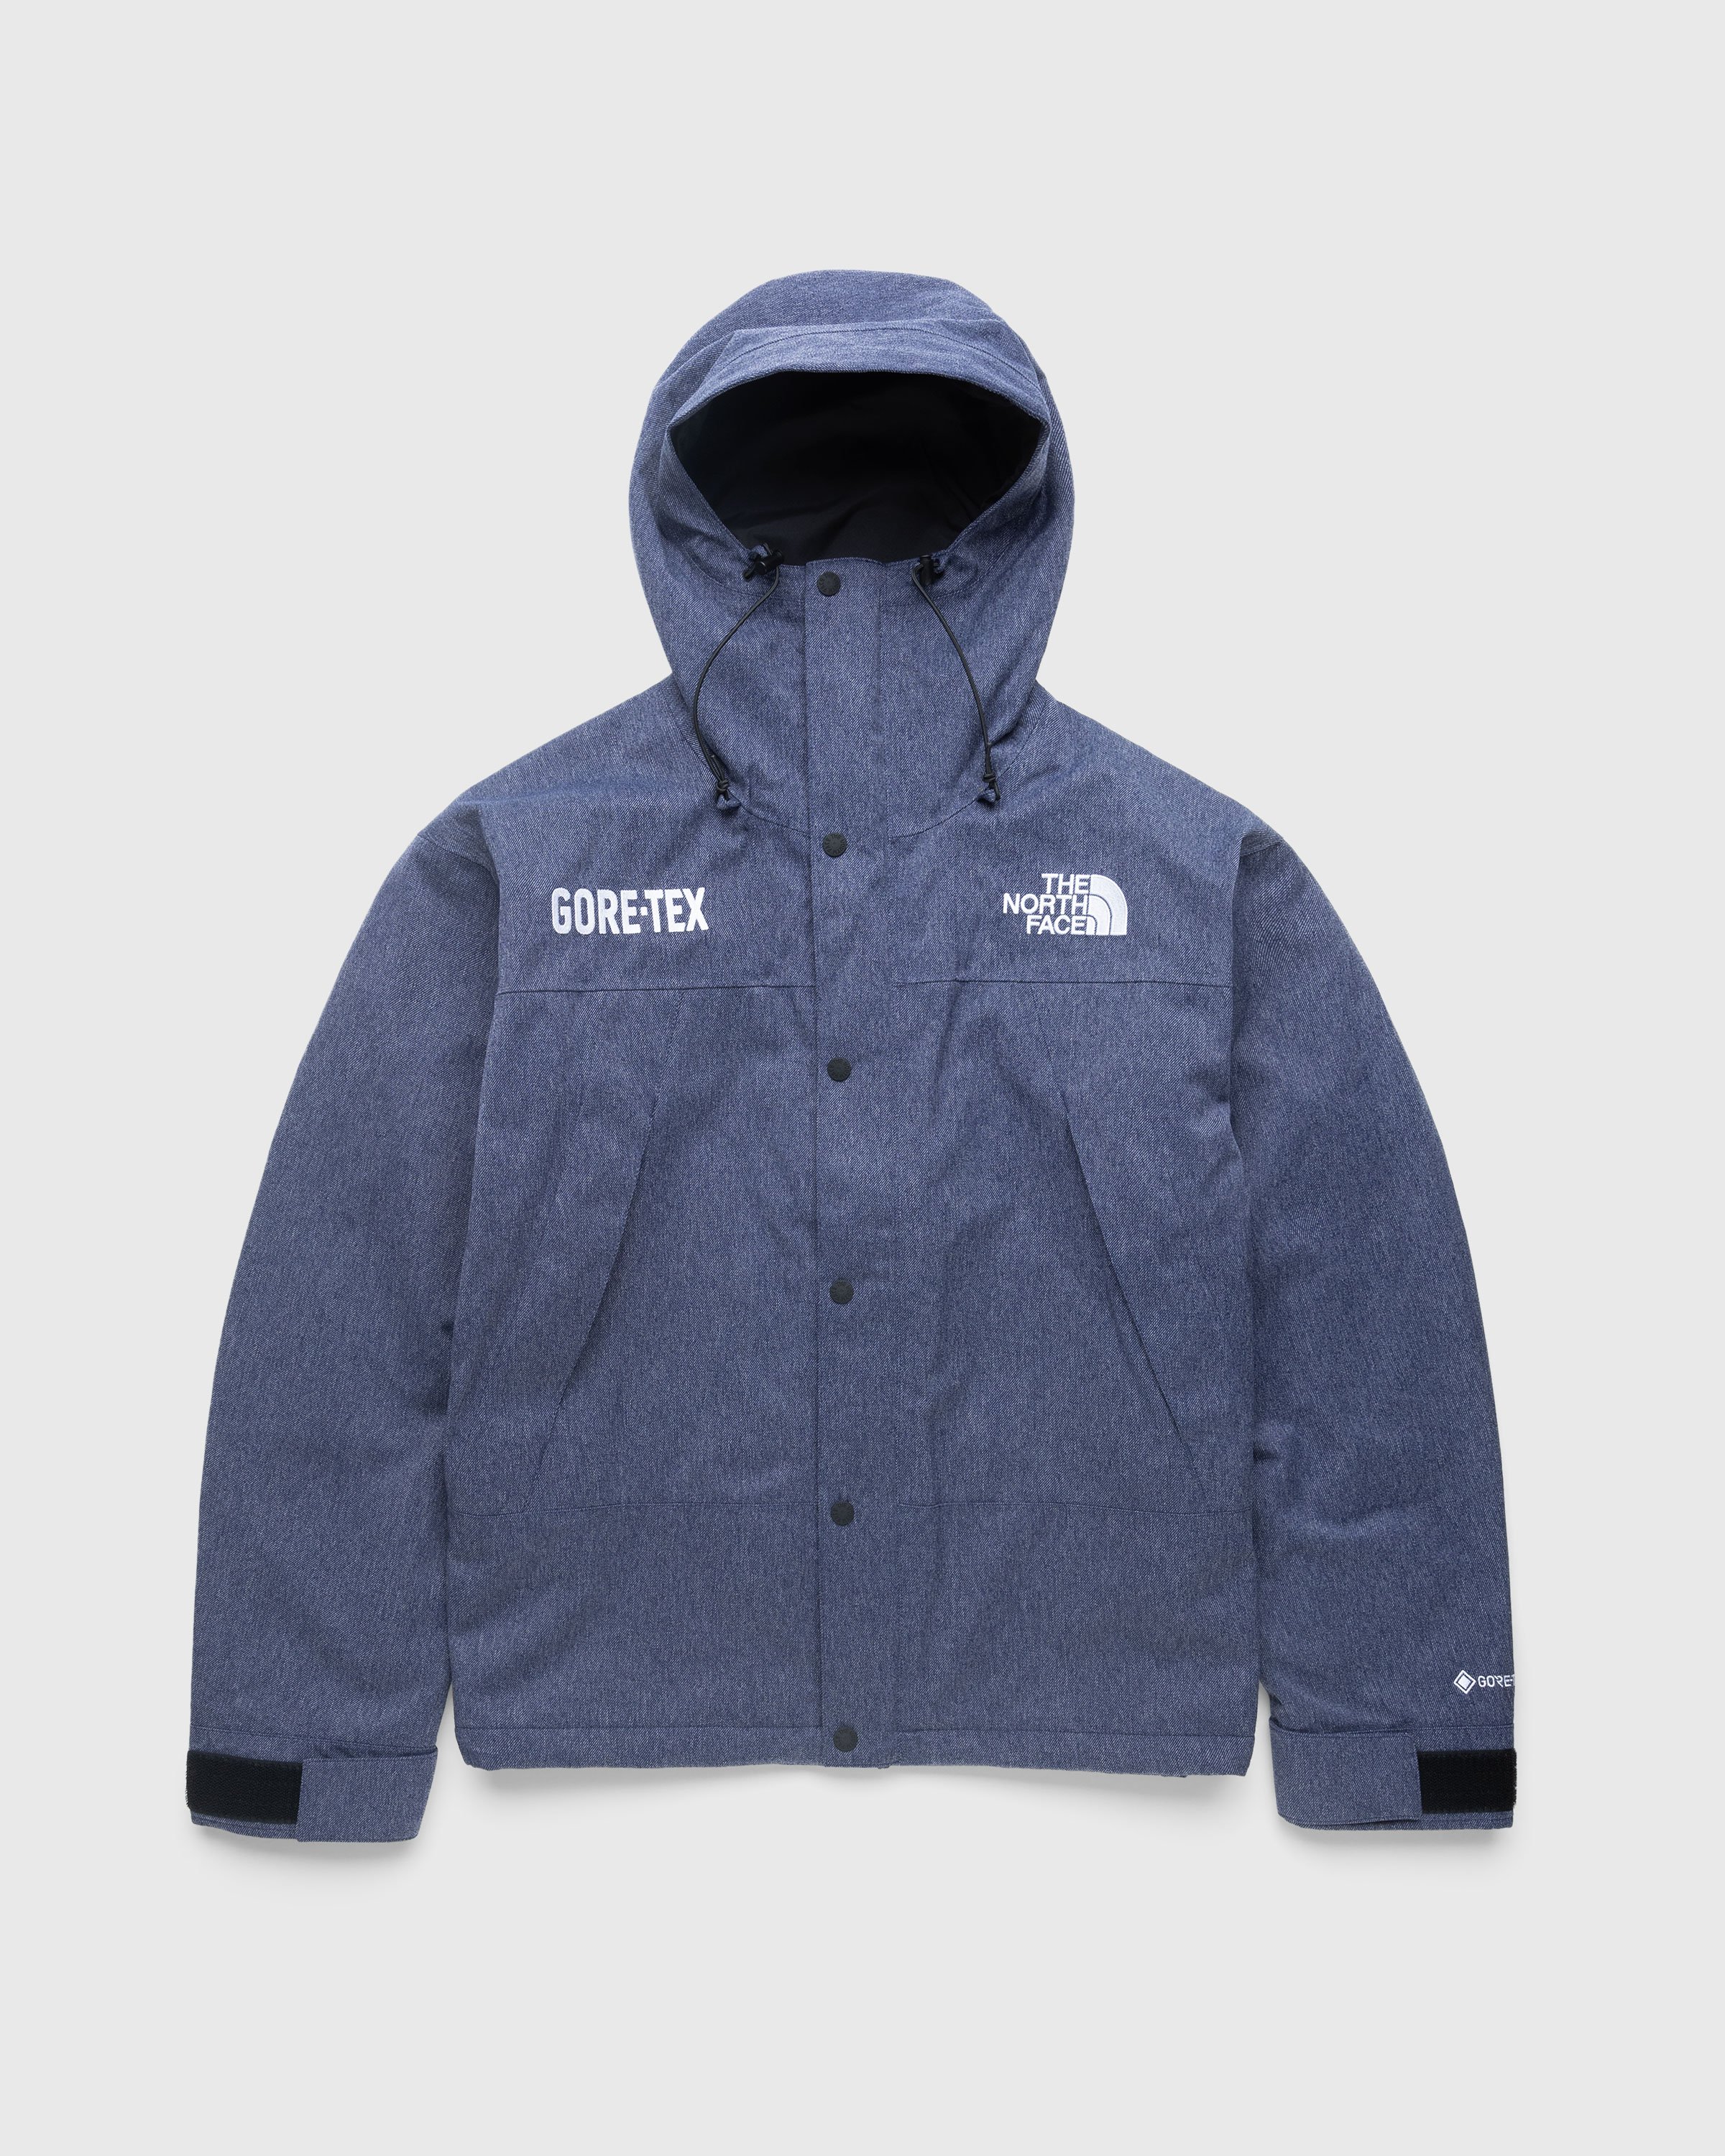 The North Face – GORE-TEX Mountain Jacket Denim Blue/TNF Black |  Highsnobiety Shop